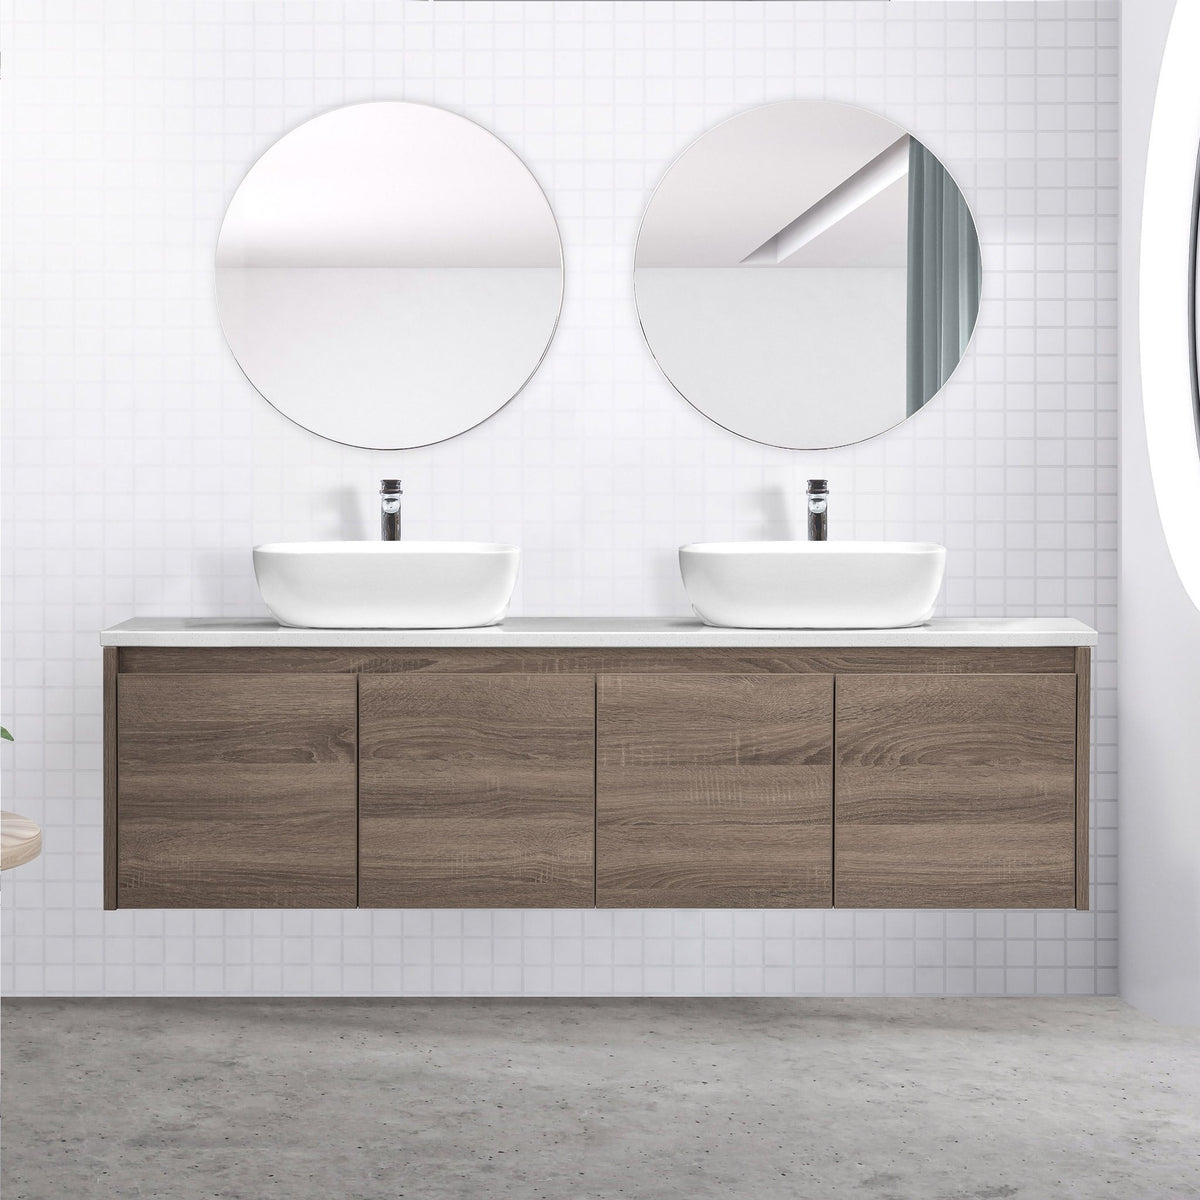 Aro 1500mm White Double Basin Freestanding Bathroom Vanity Drawers